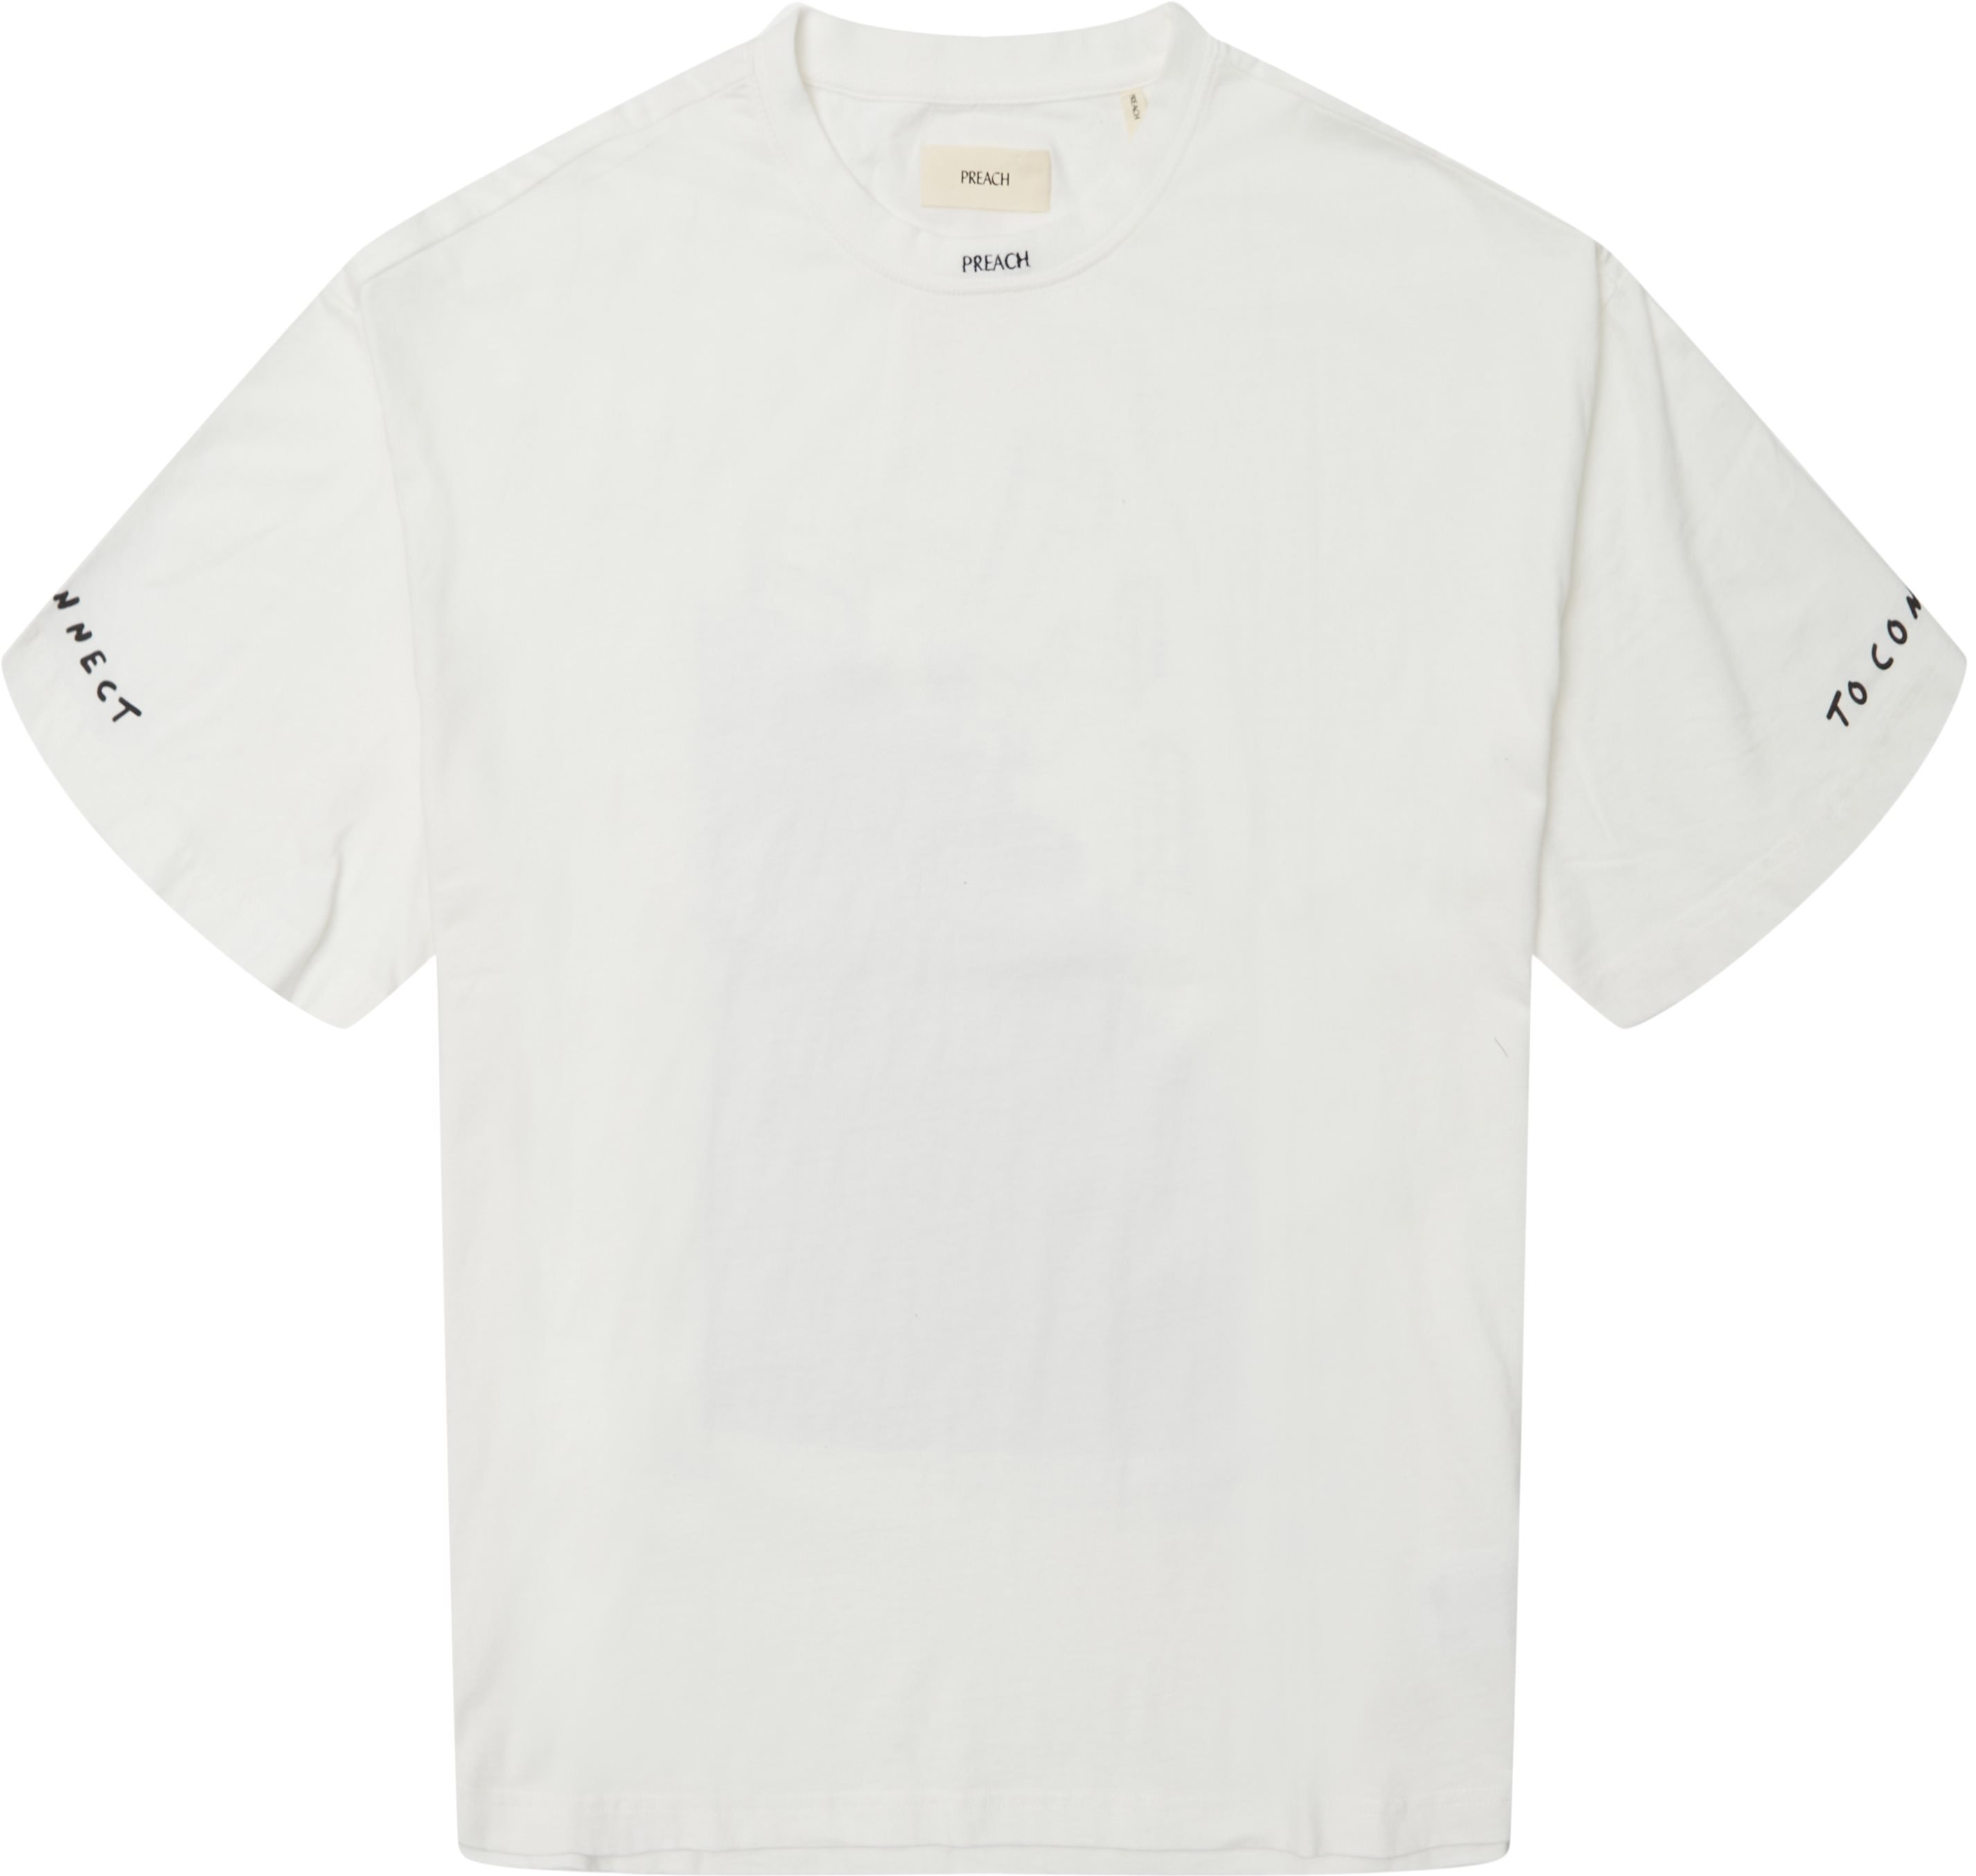 Spinkled Utopia Tee - T-shirts - Regular fit - Hvid